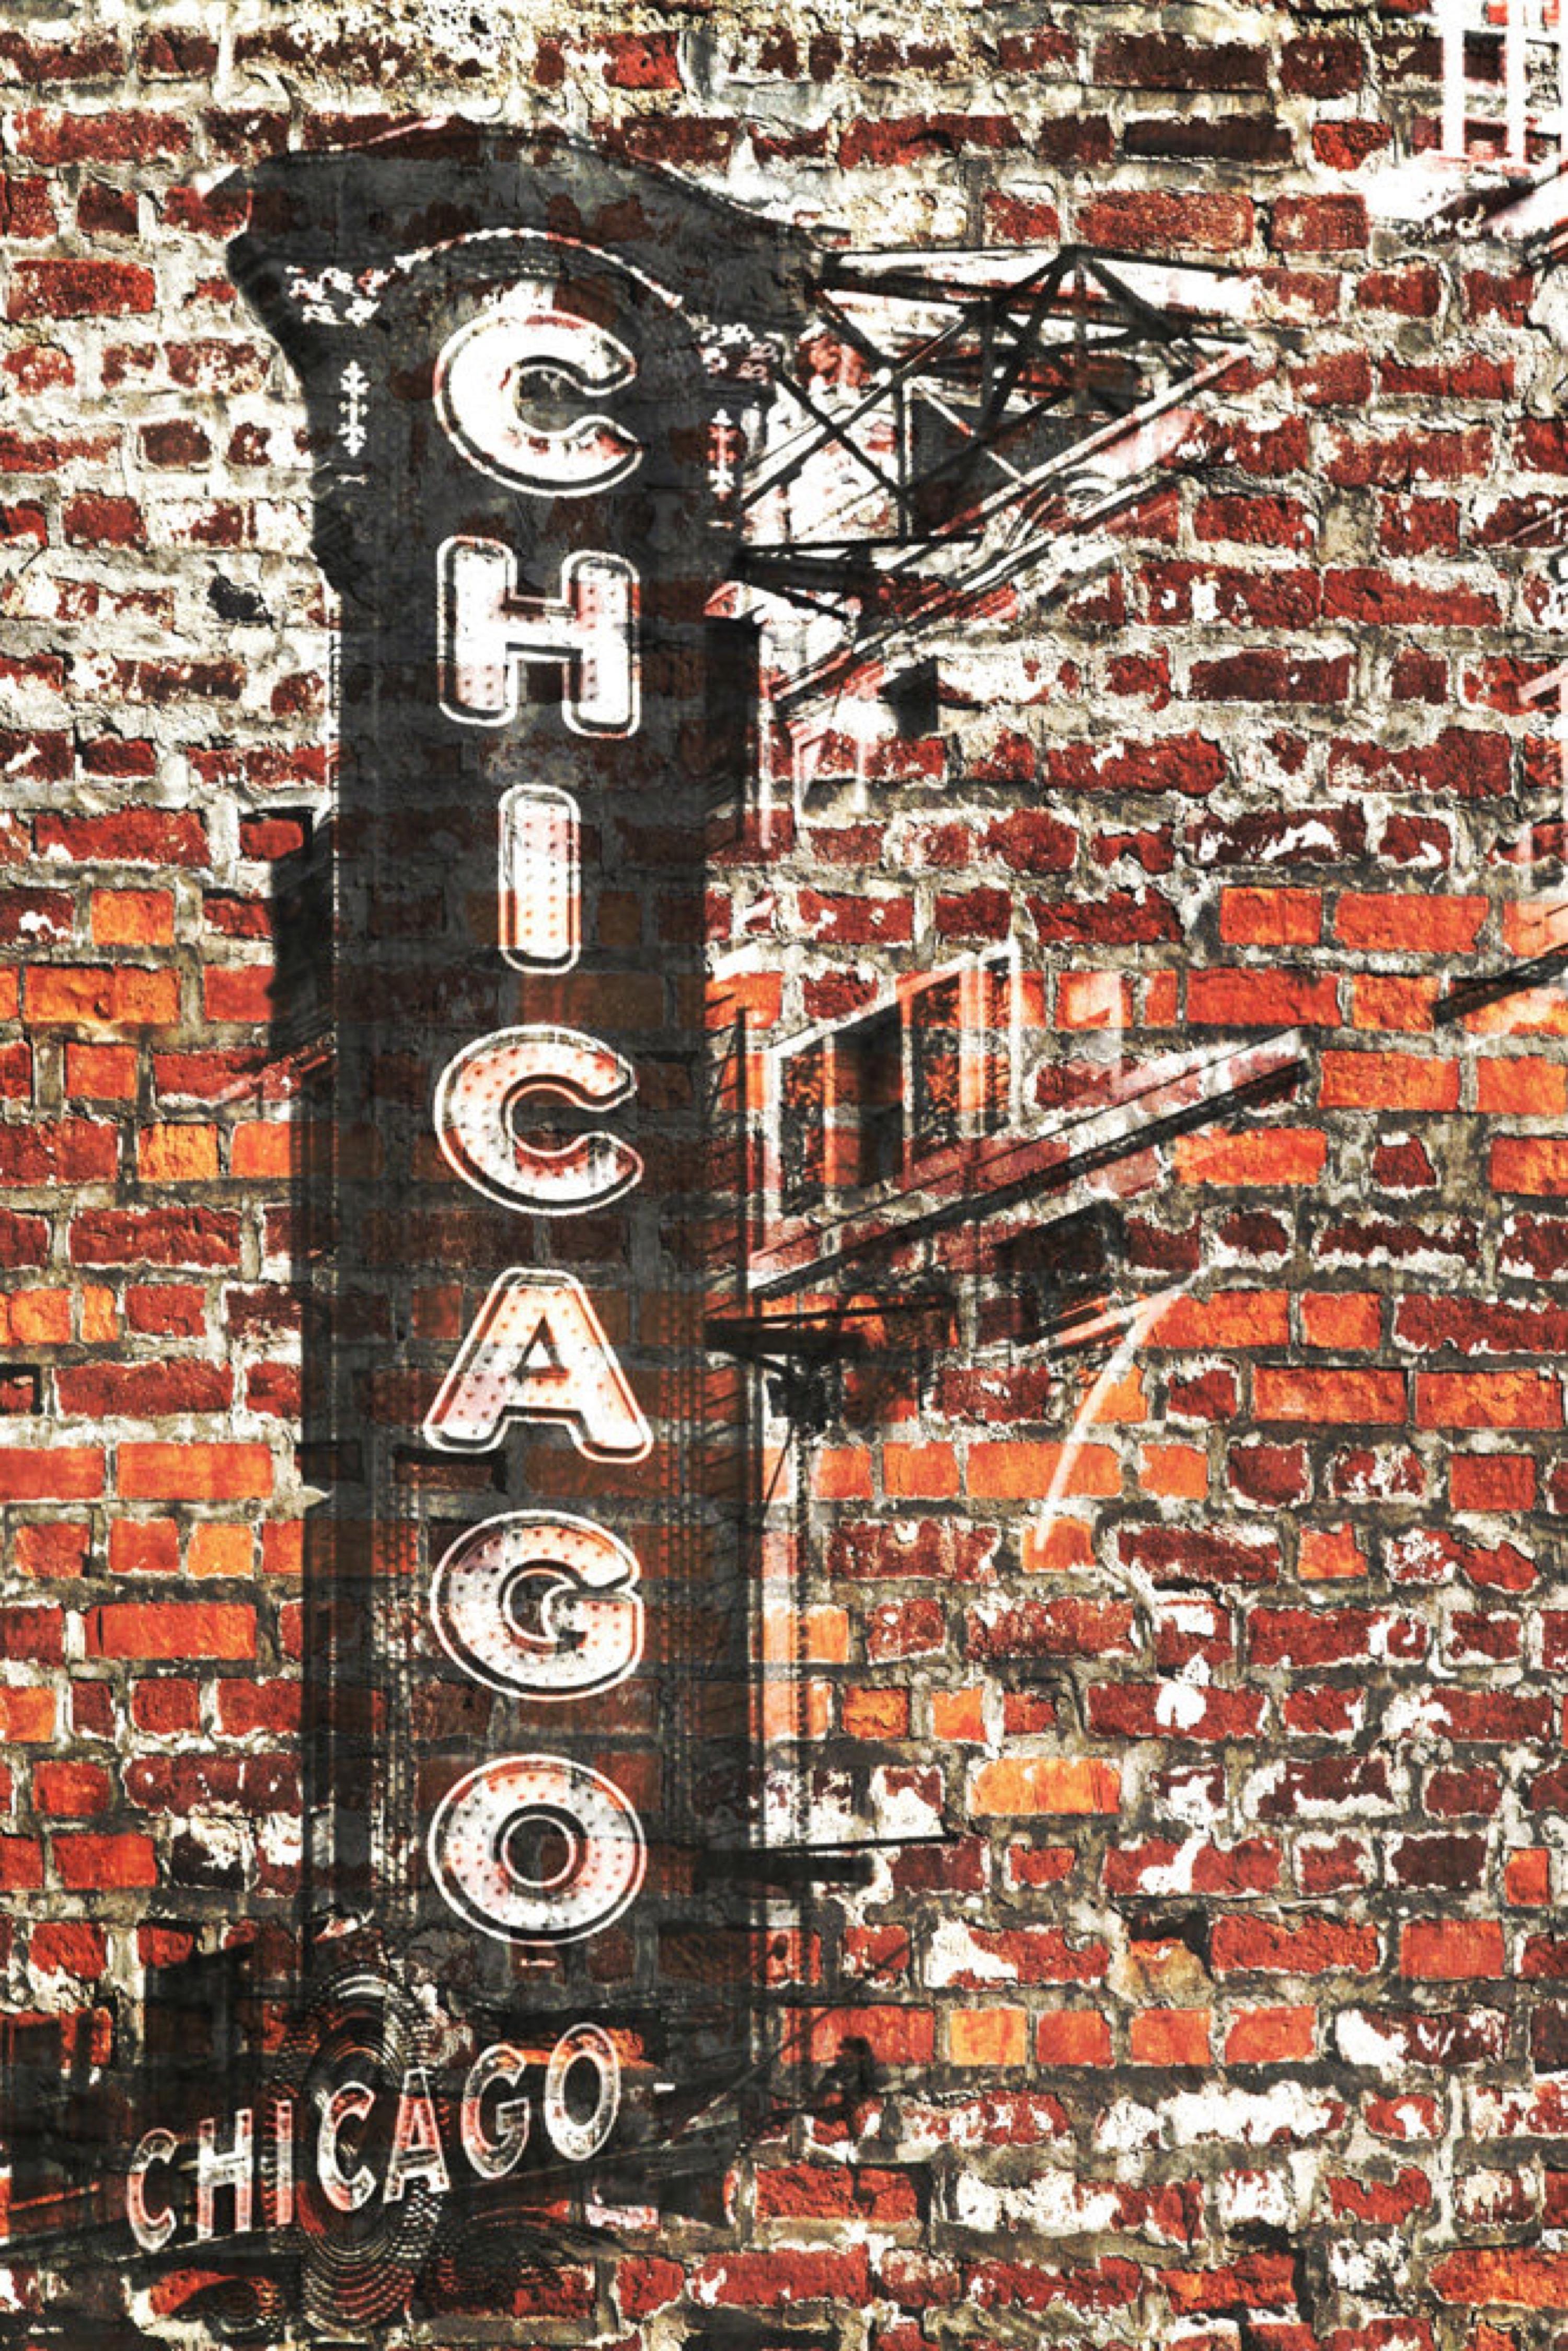 Chicago Cityscape Mixed Media-Gemälde auf Leinwand 38 x 56